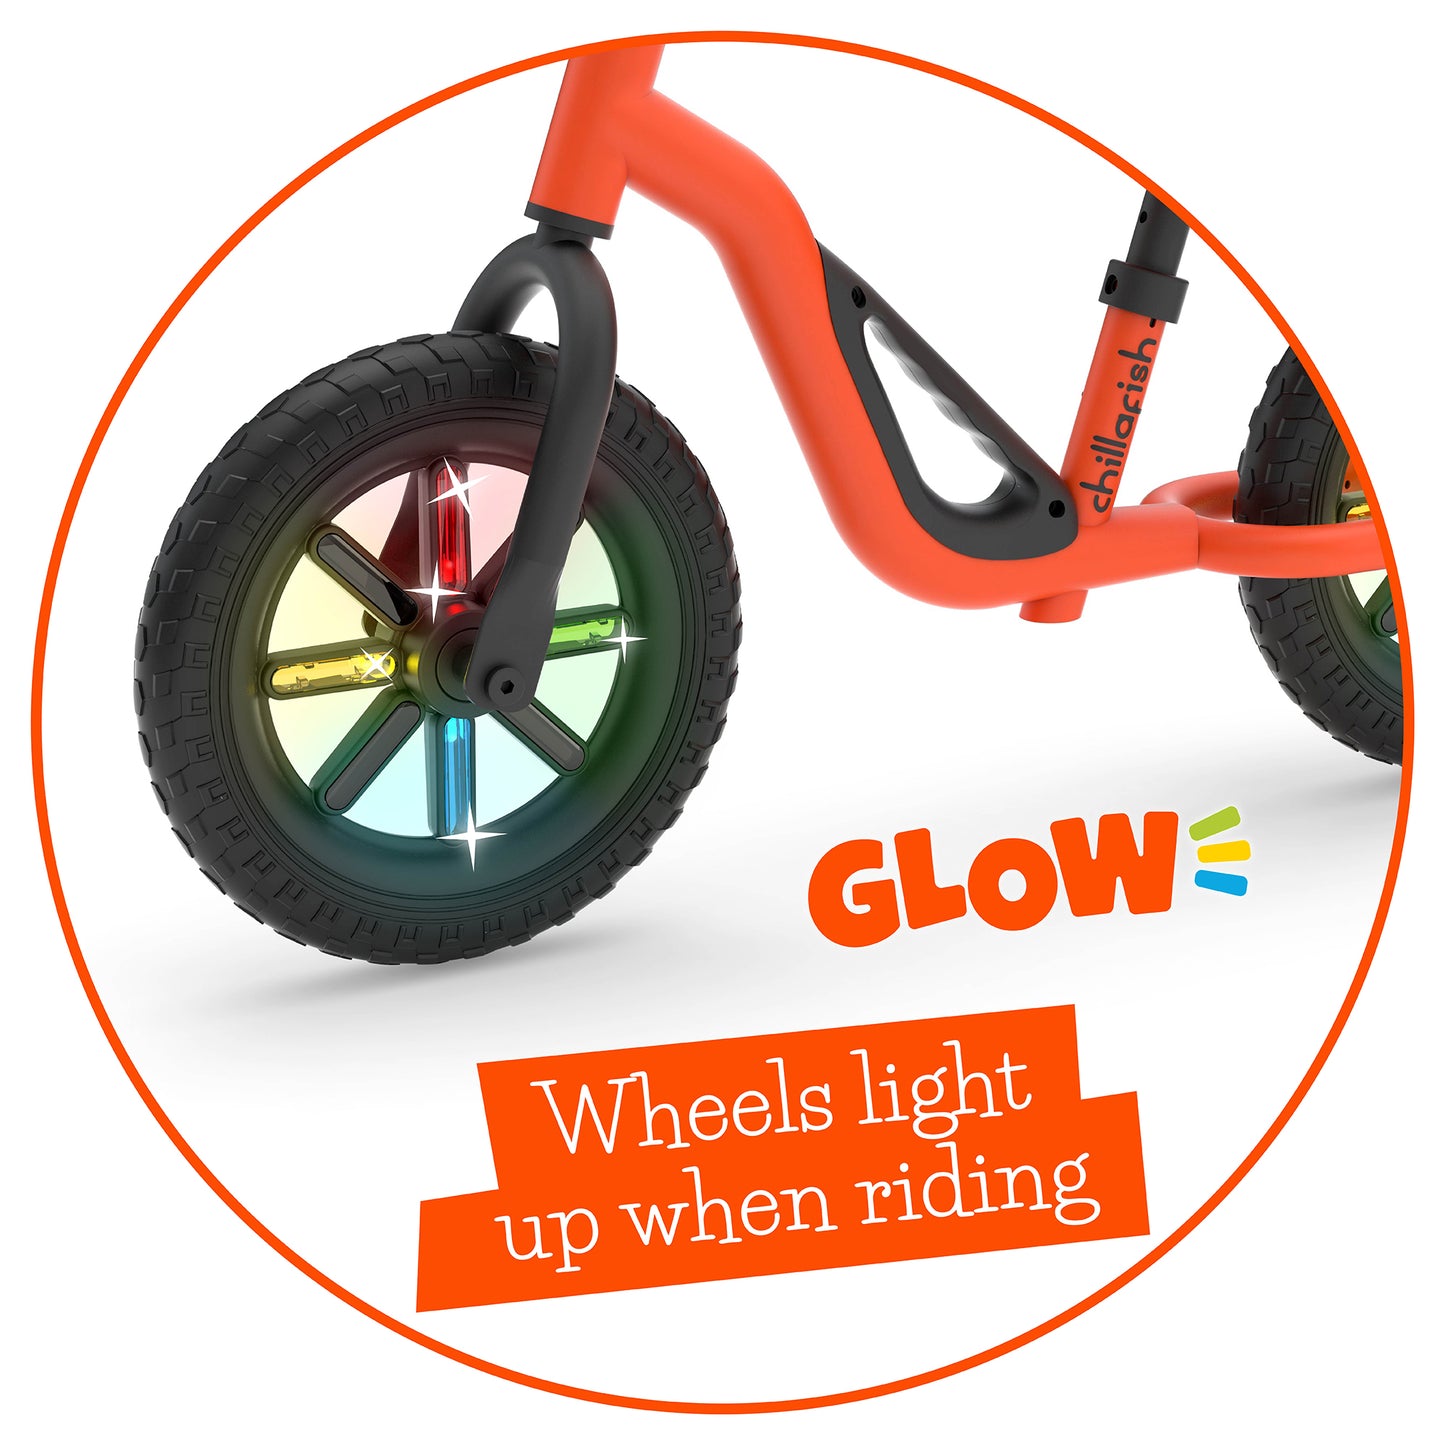 Charlie GLOW - 10" balance bike with light-up wheels